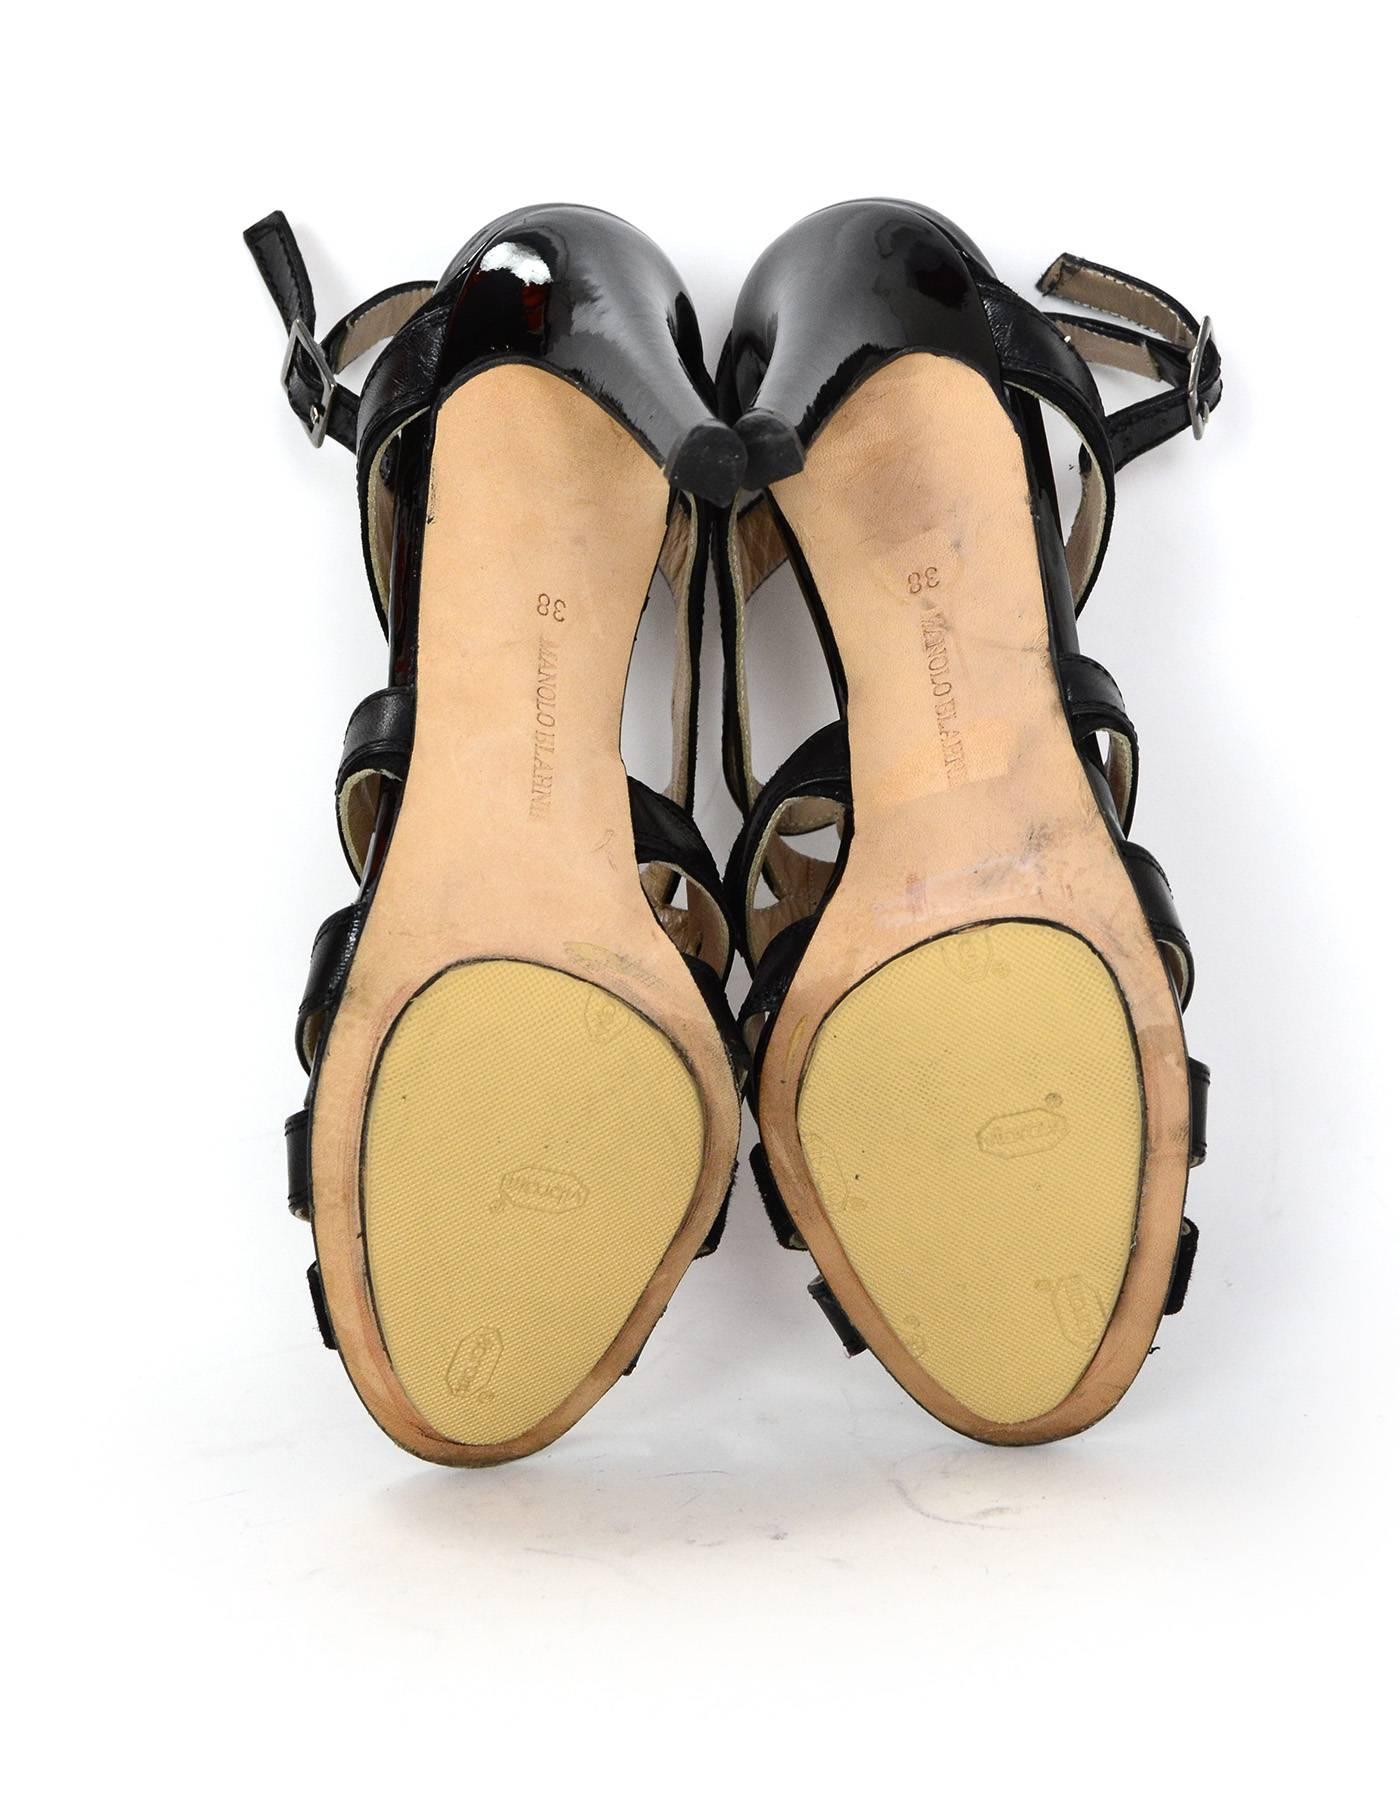 Manolo Blahnik Black Leather & Suede Strappy Sandals sz IT38 3